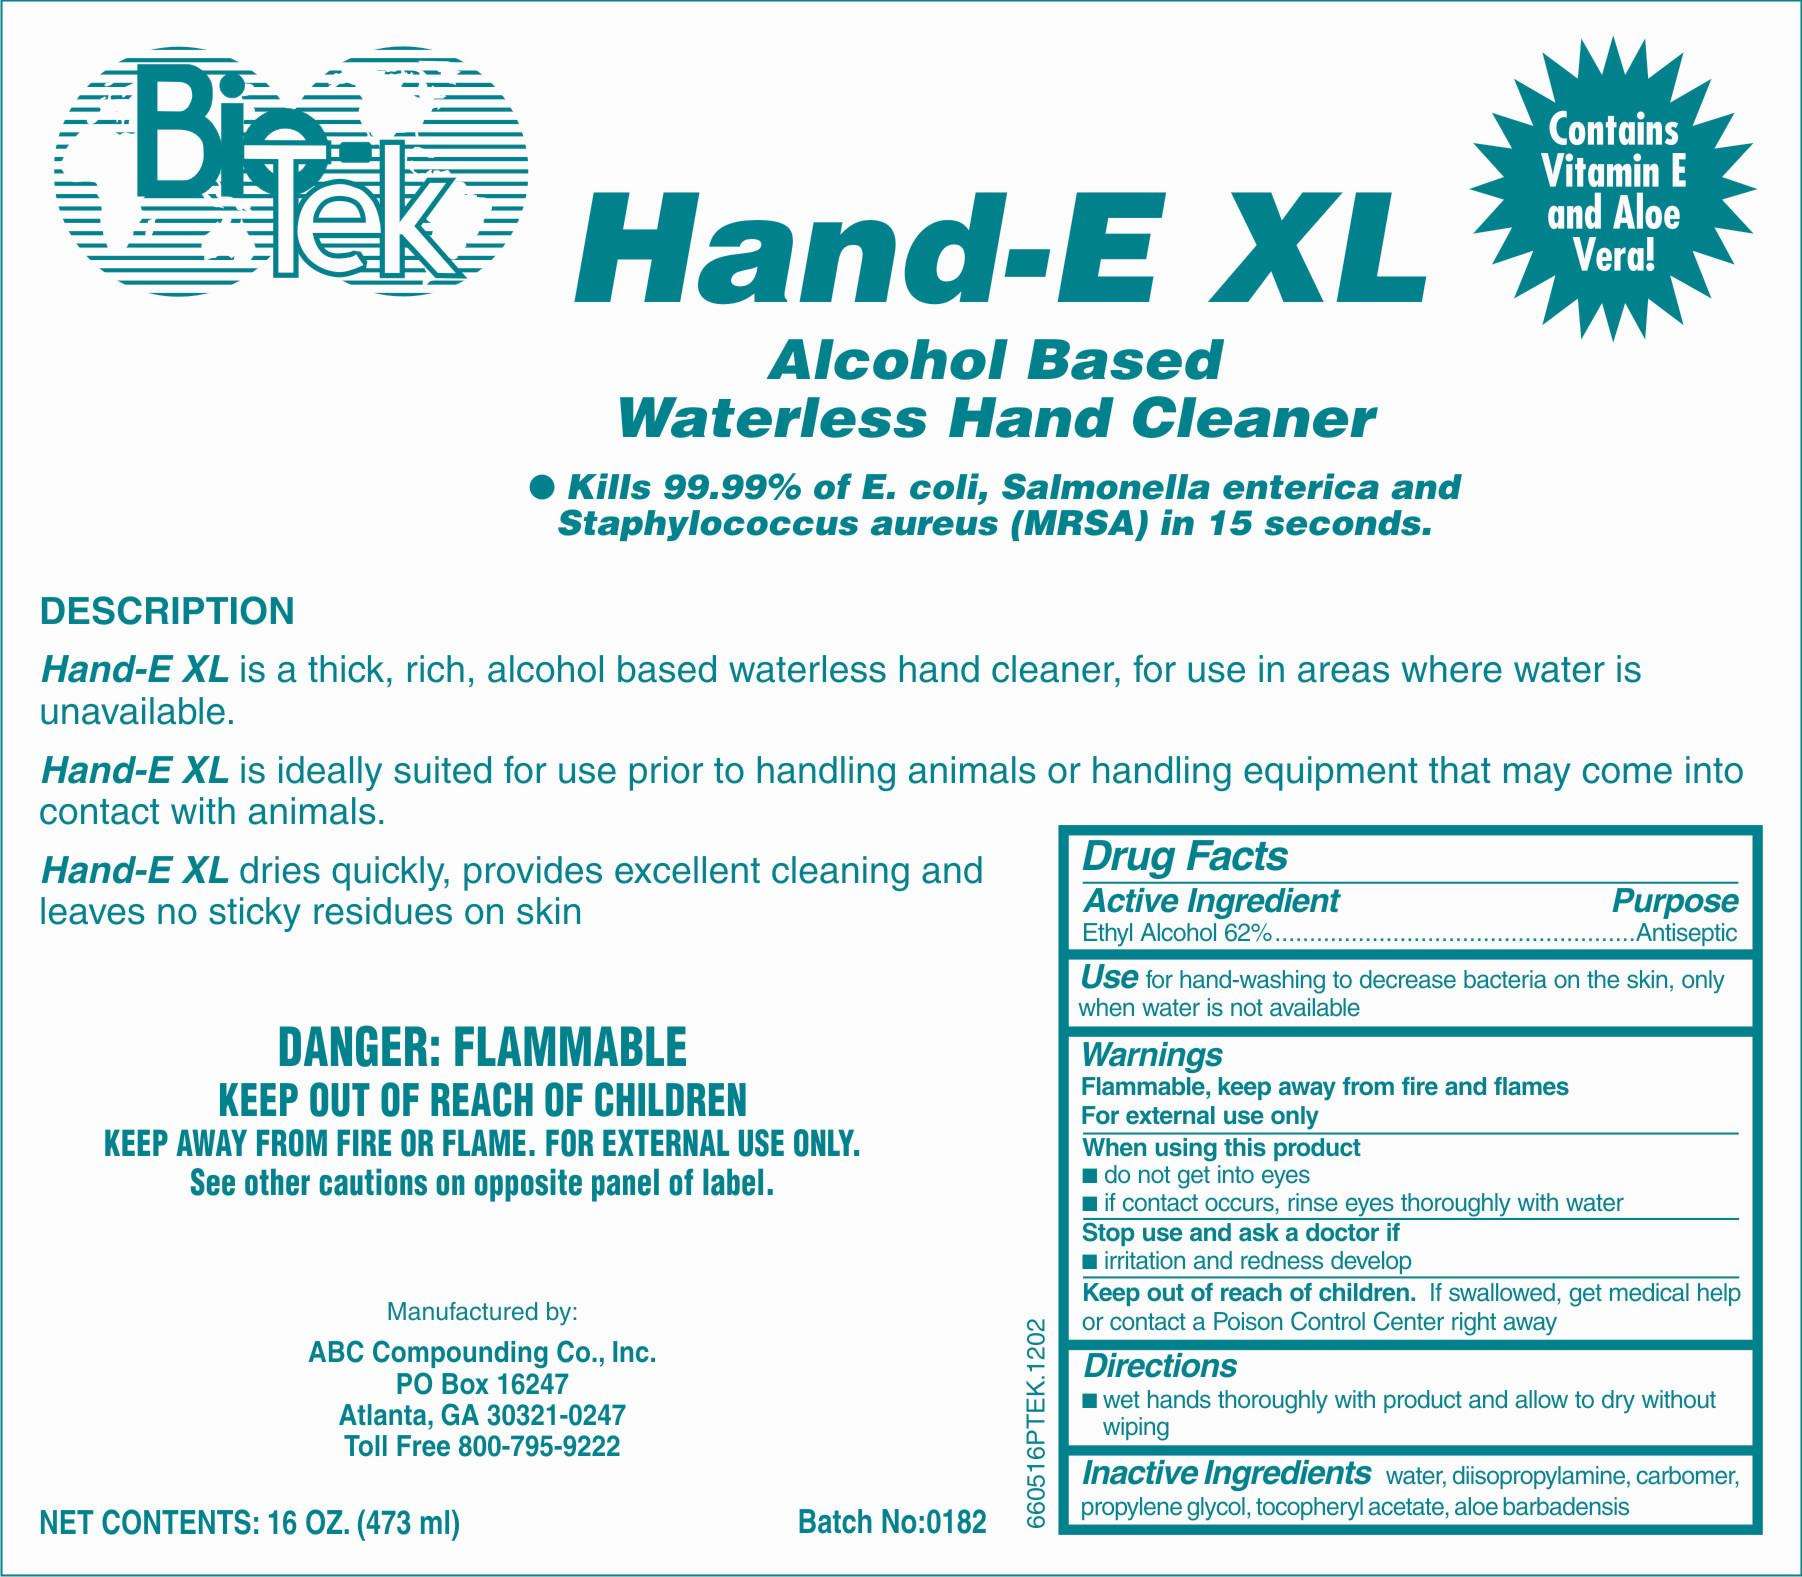 Hand-E XL